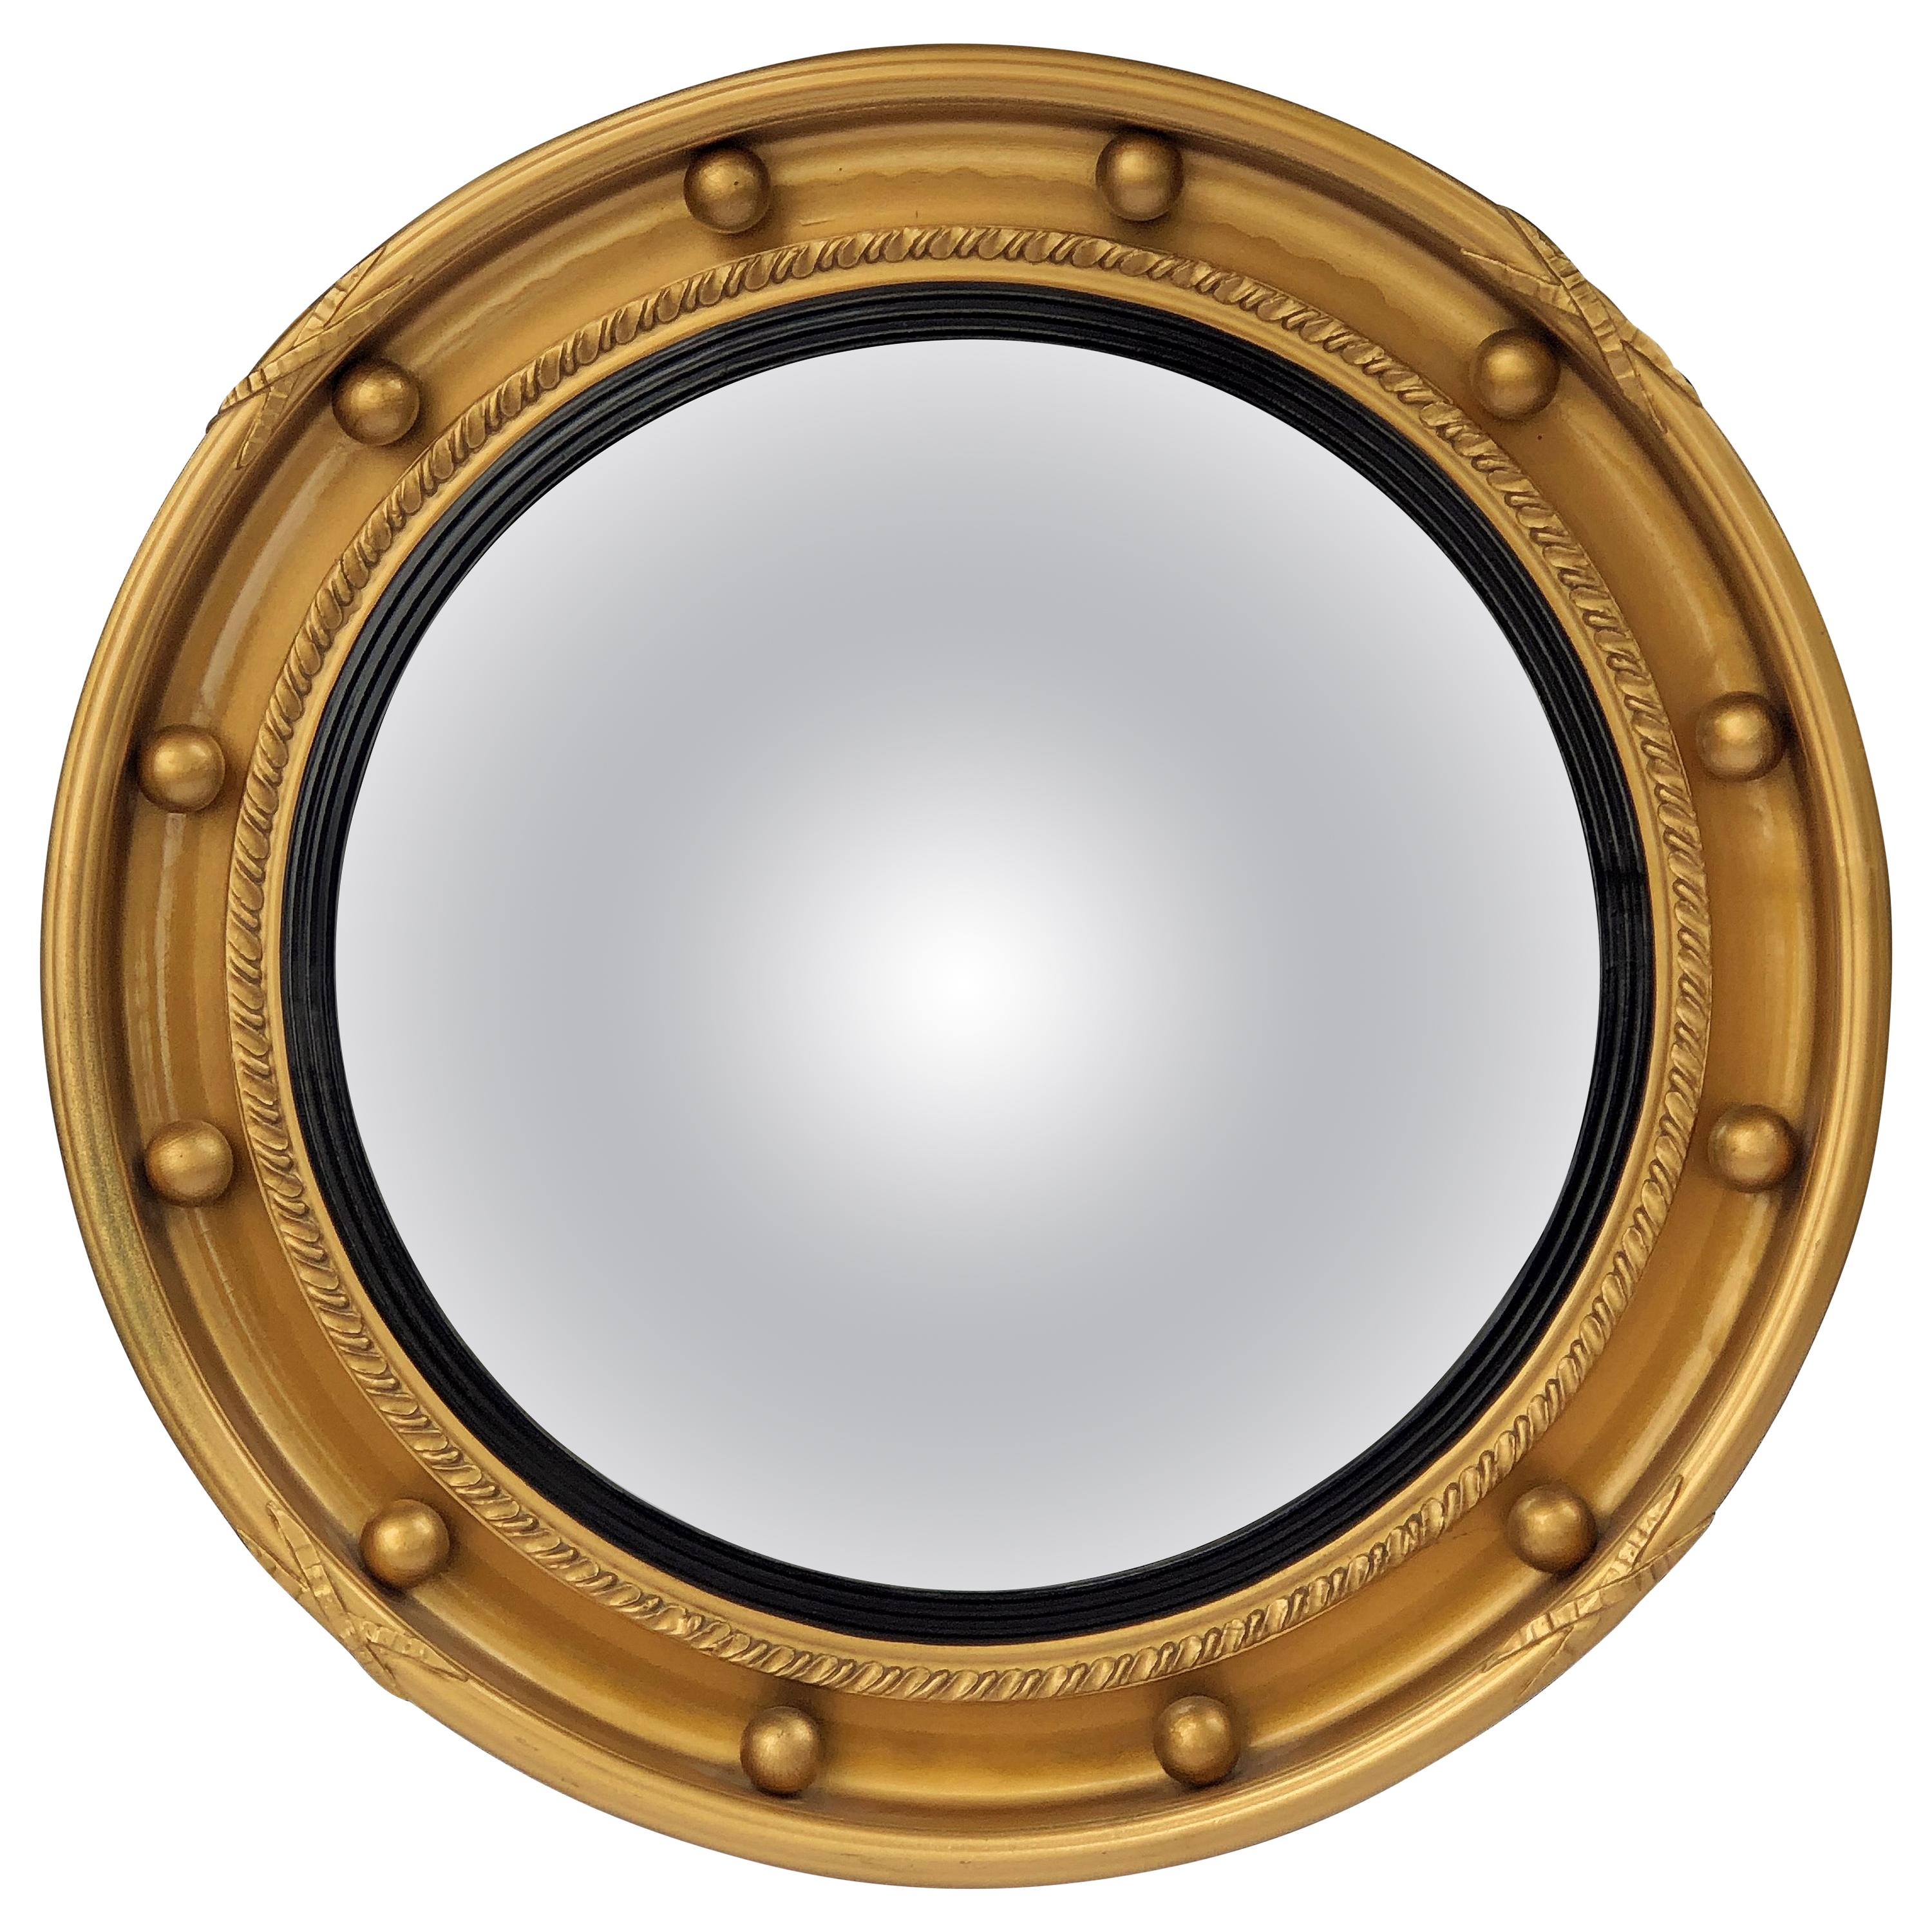 English Round Gilt Framed Convex Mirror (Diameter 16)